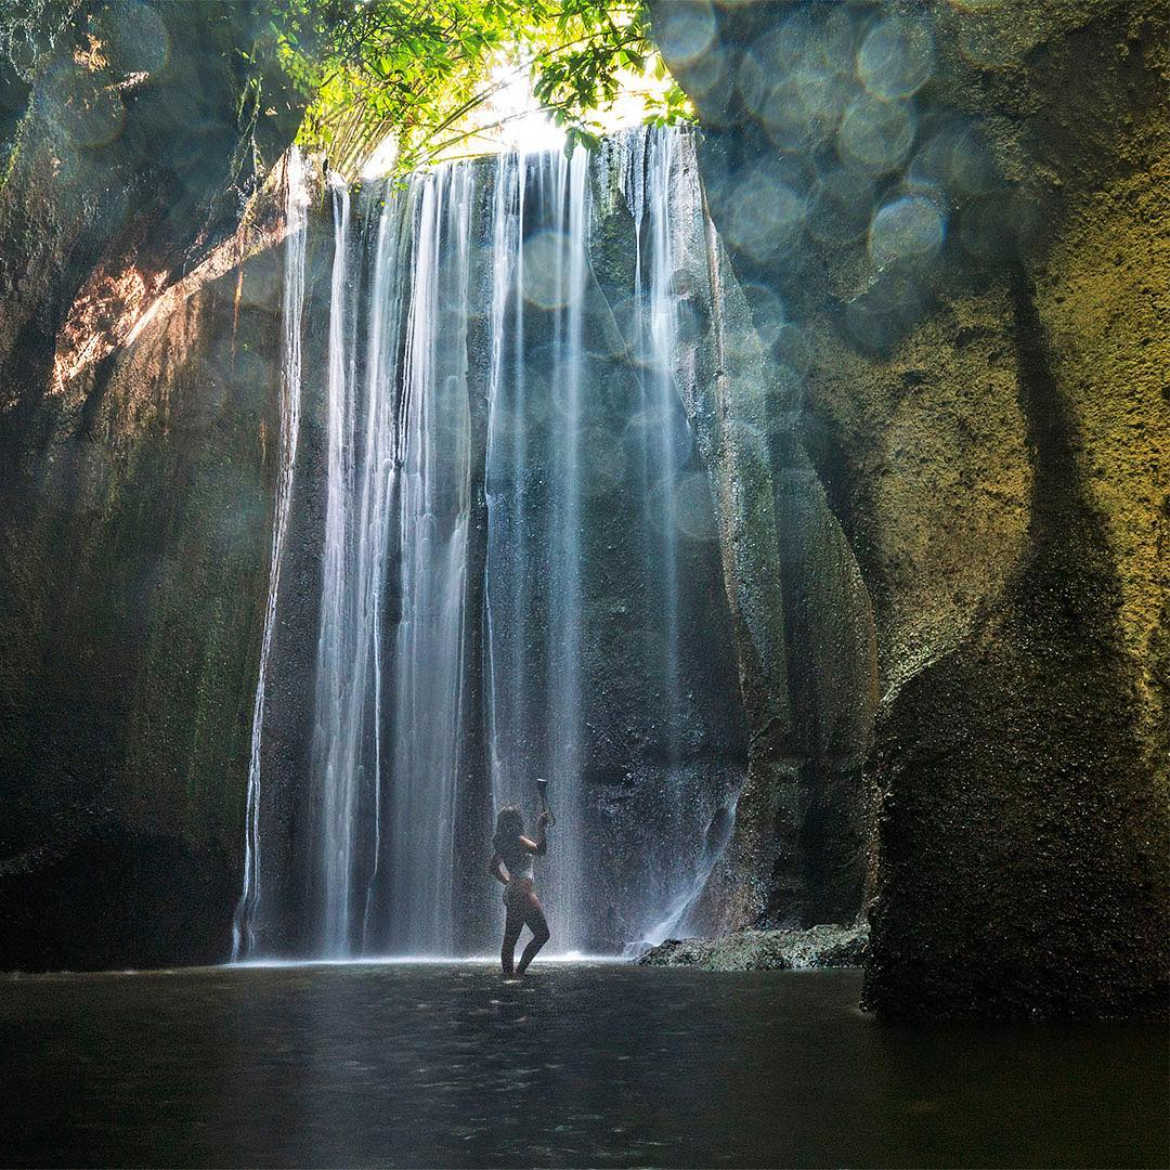 Tukad Cepung Waterfall - Best Waterfalls in Bali